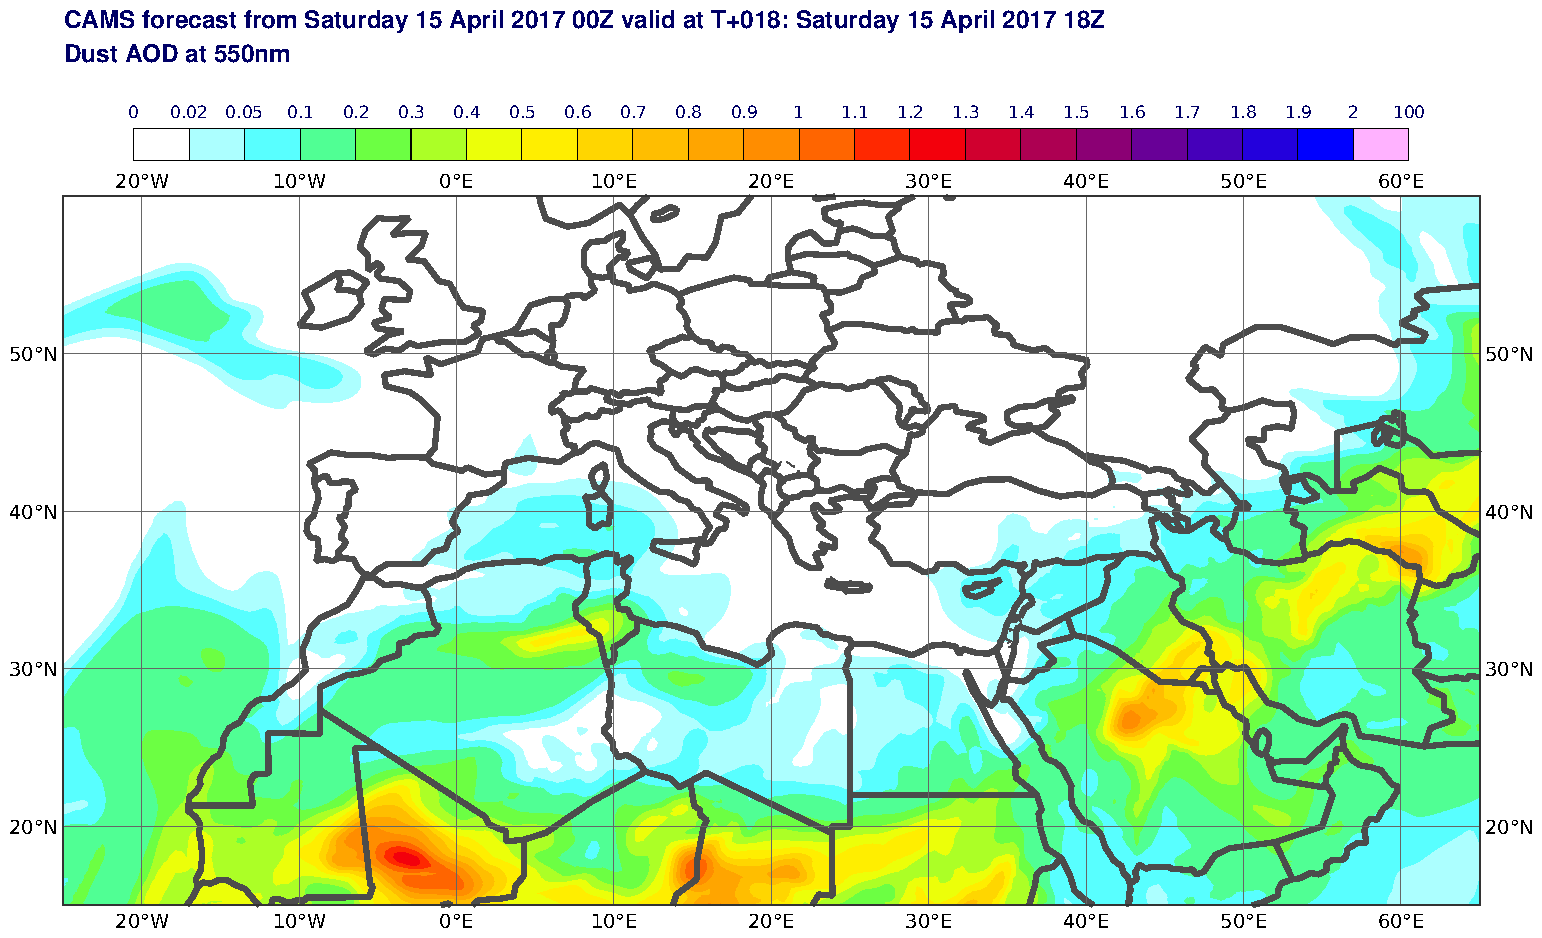 Dust AOD at 550nm valid at T18 - 2017-04-15 18:00